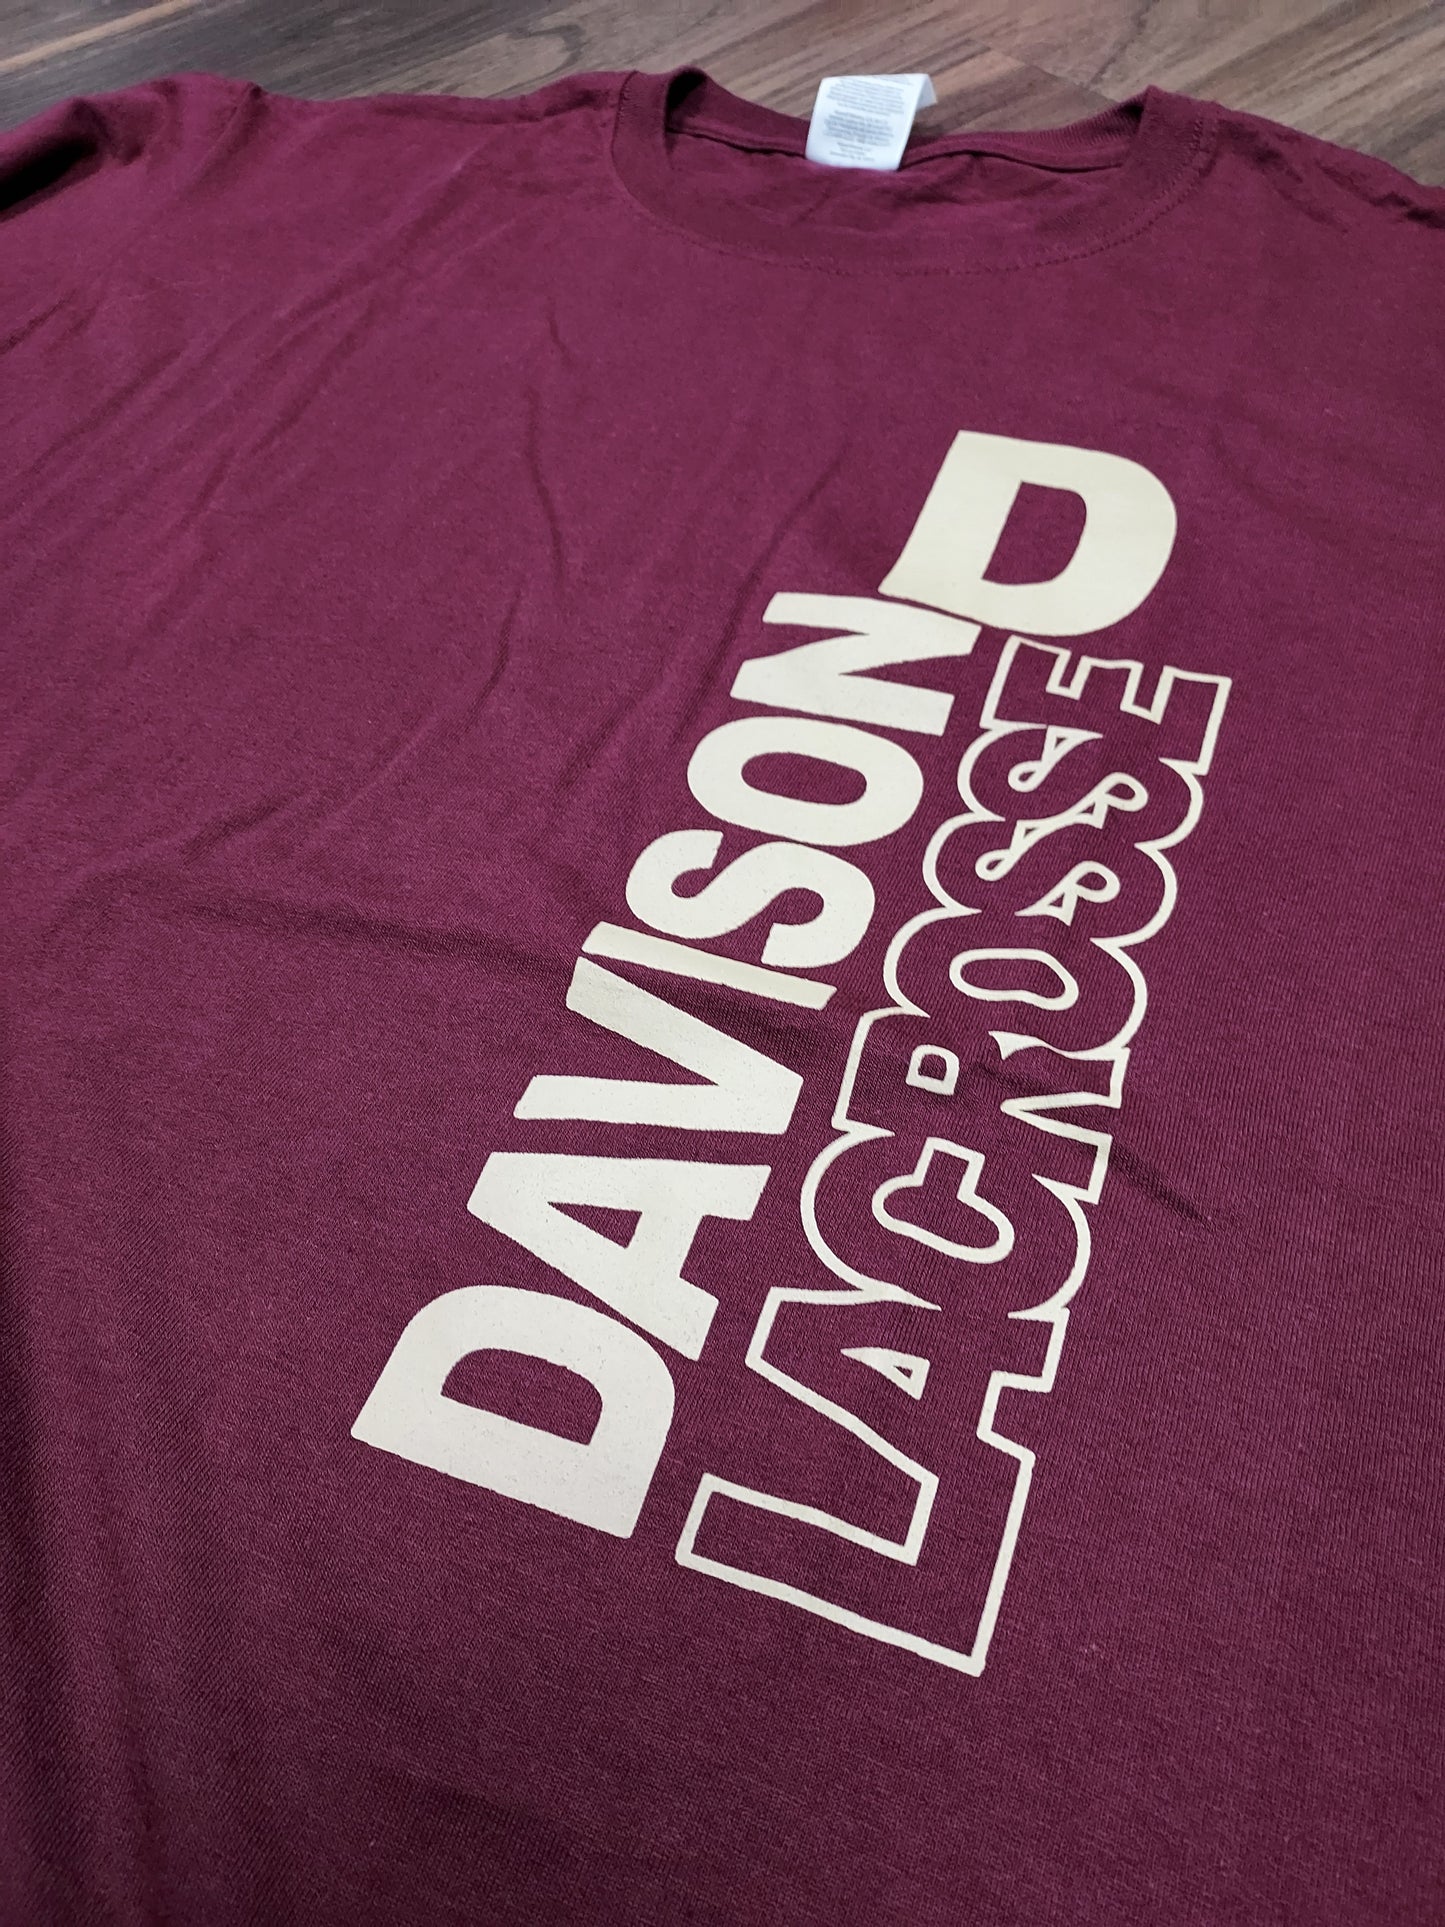 Davison Lacrosse Classic Basic T-shirt